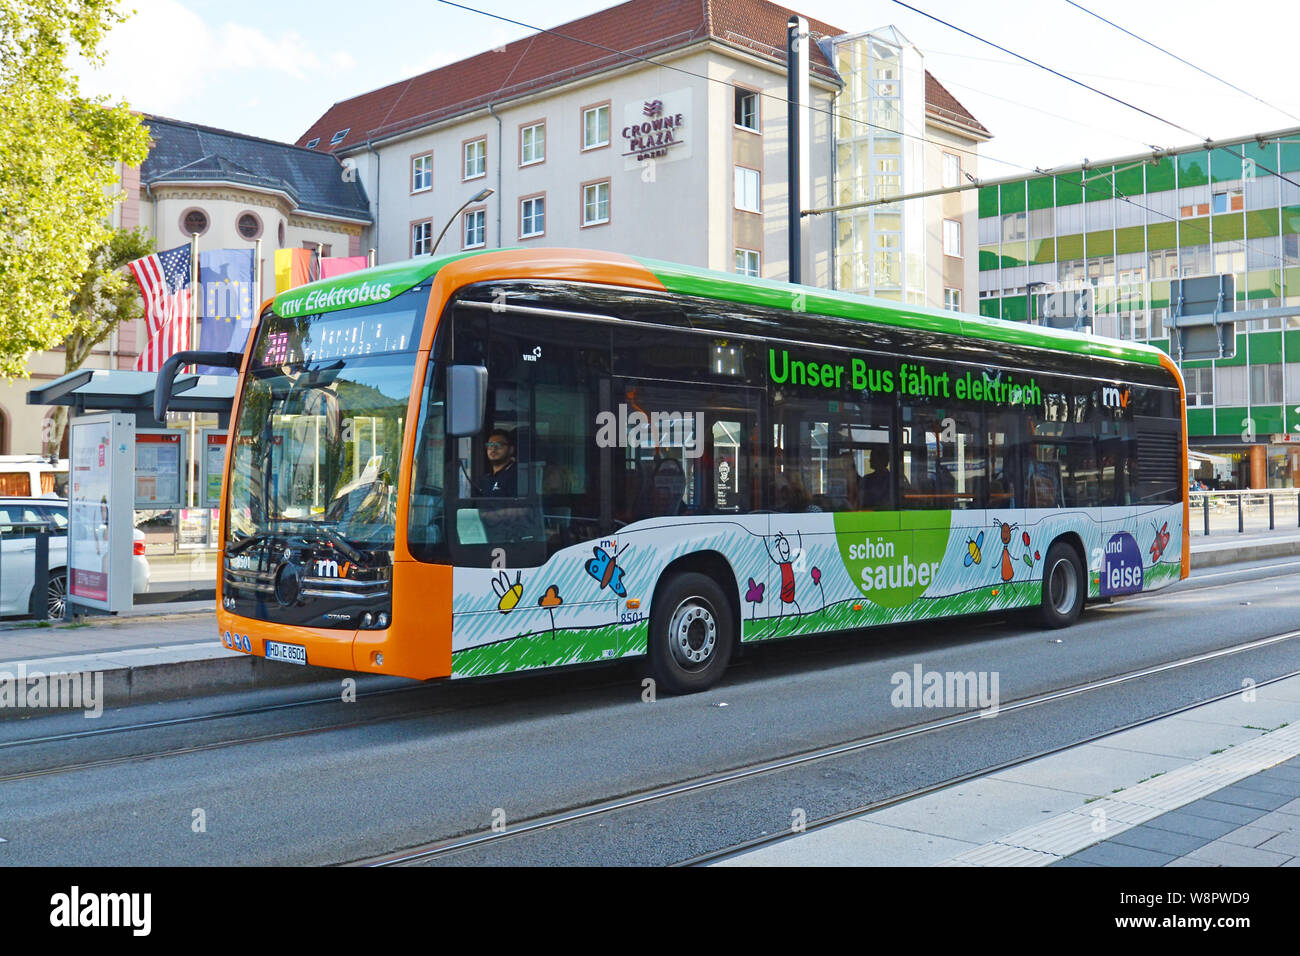 Bus stop germany -Fotos und -Bildmaterial in hoher Auflösung – Alamy